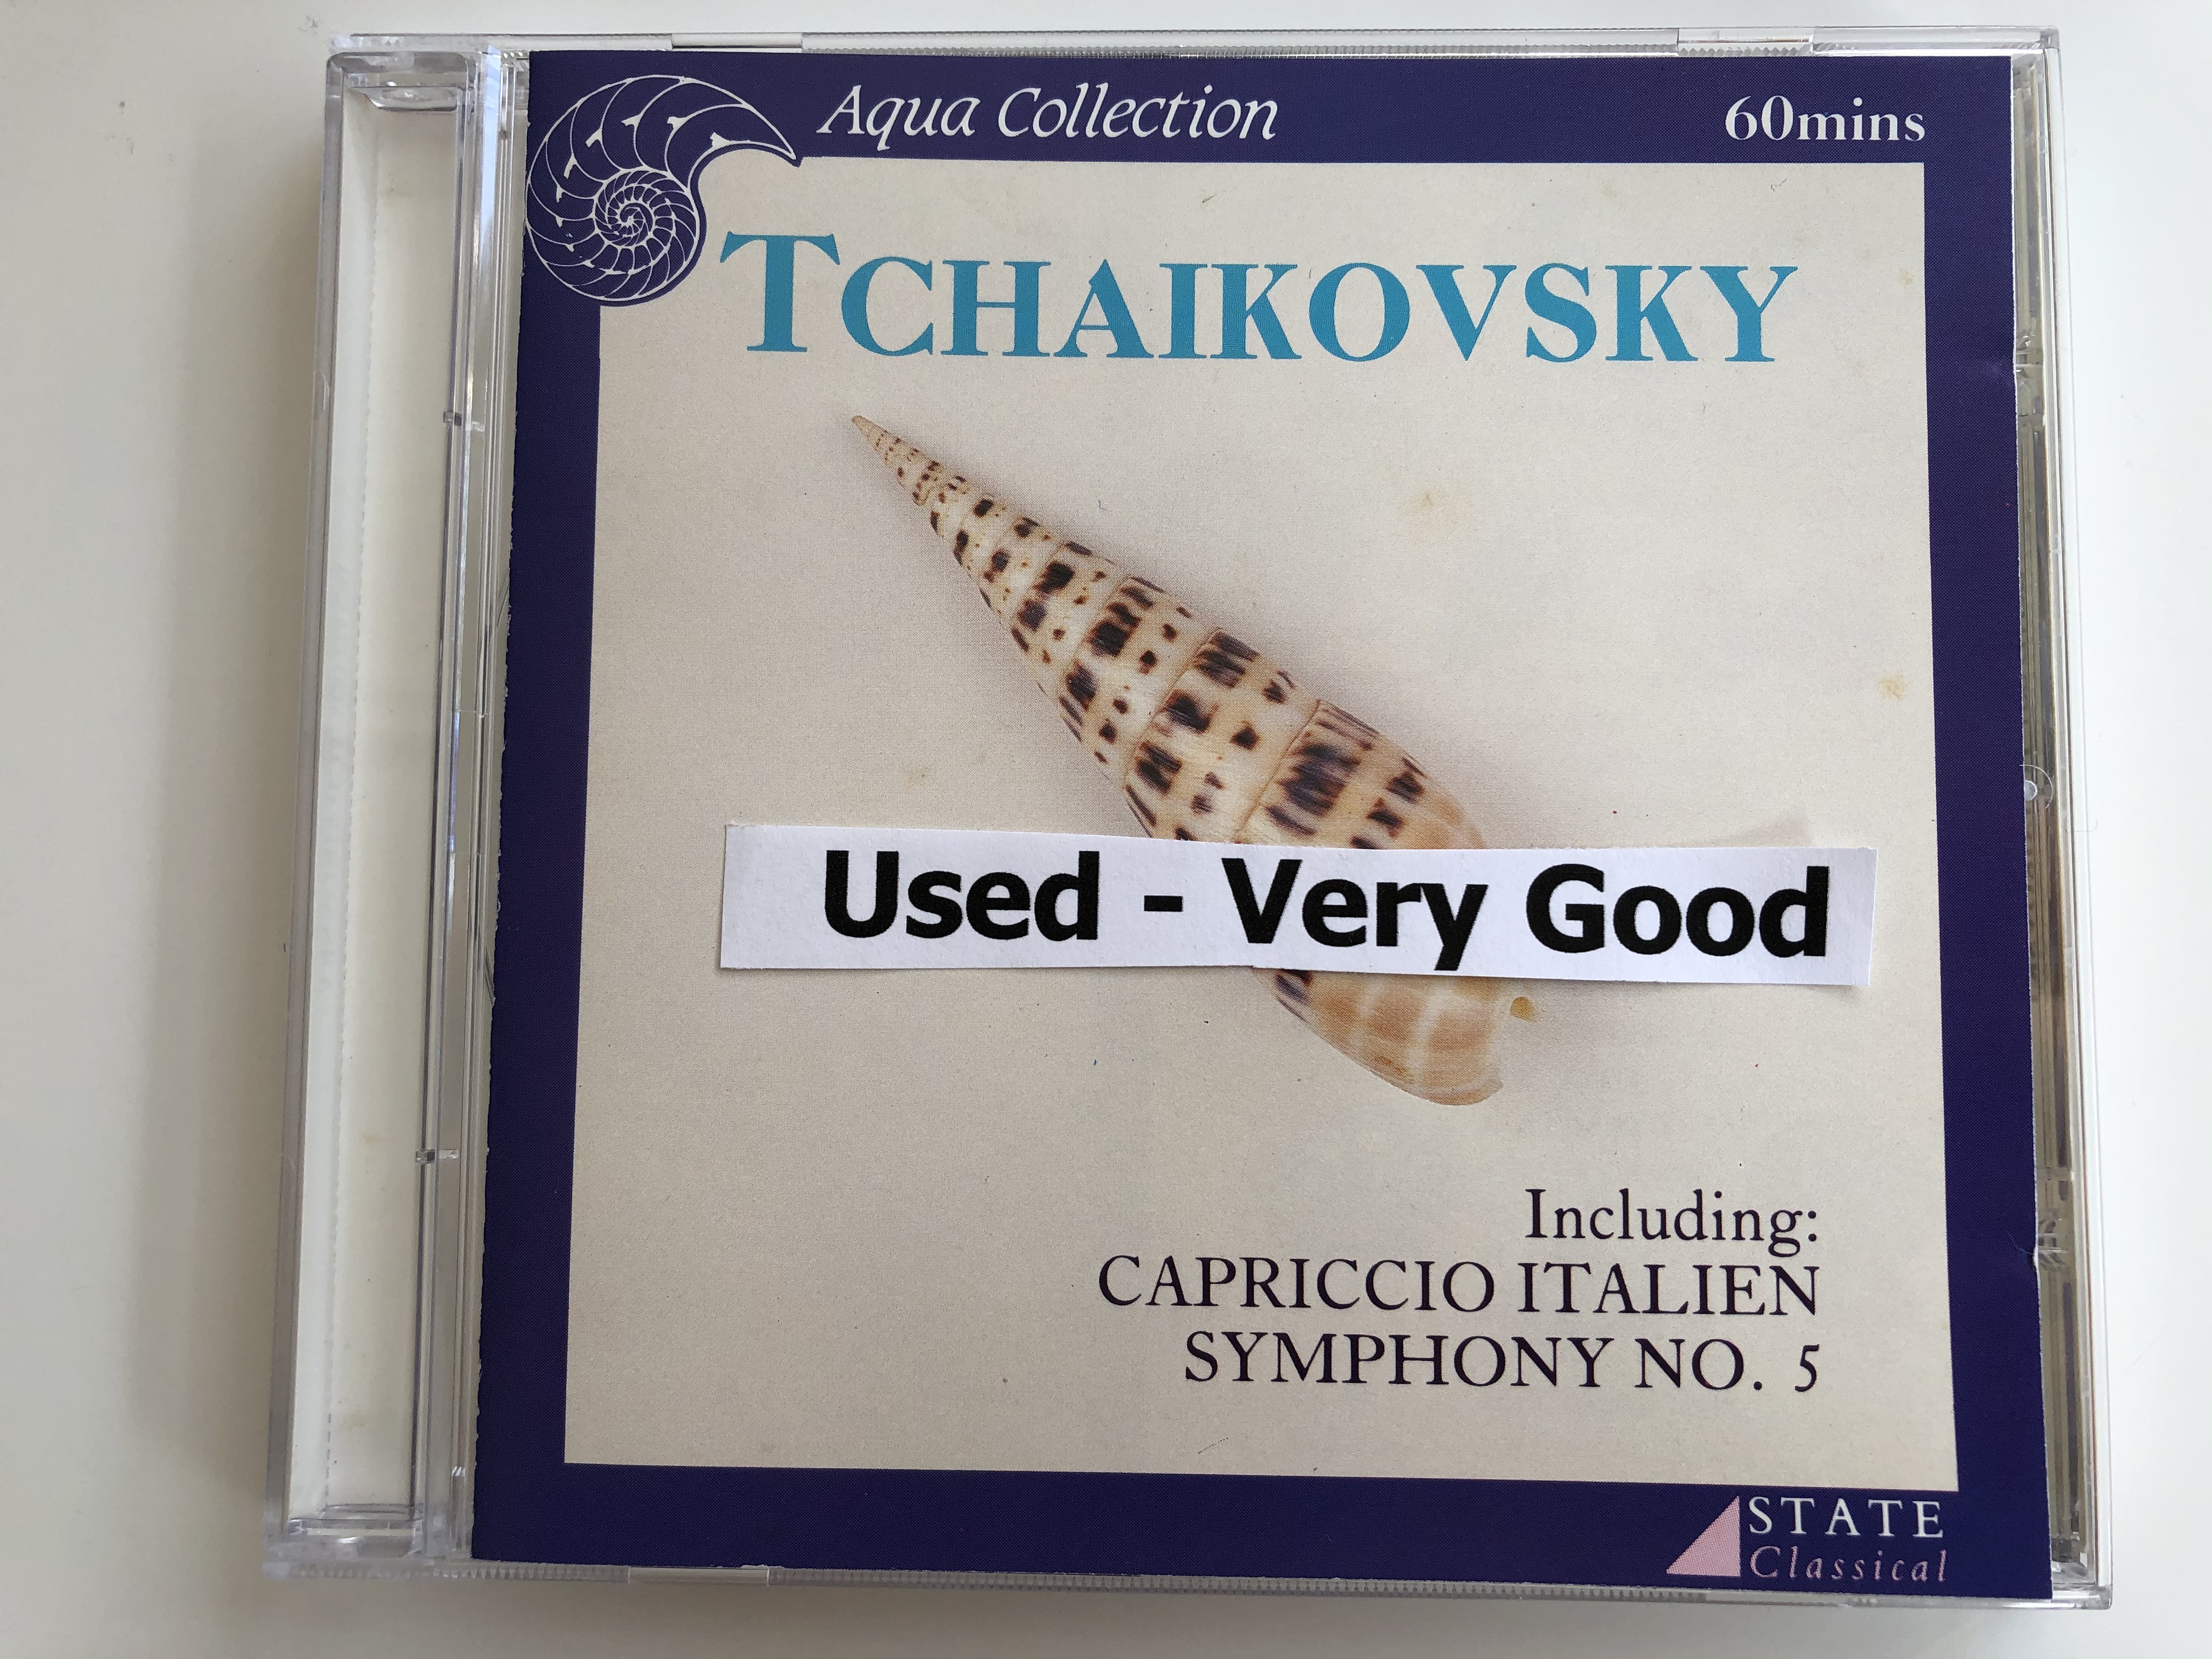 tchaikovsky-including-capriccio-italien-symphony-no.-5-60-mins-aqua-collection-audio-cd-1989-bgtd-001-1-.jpg